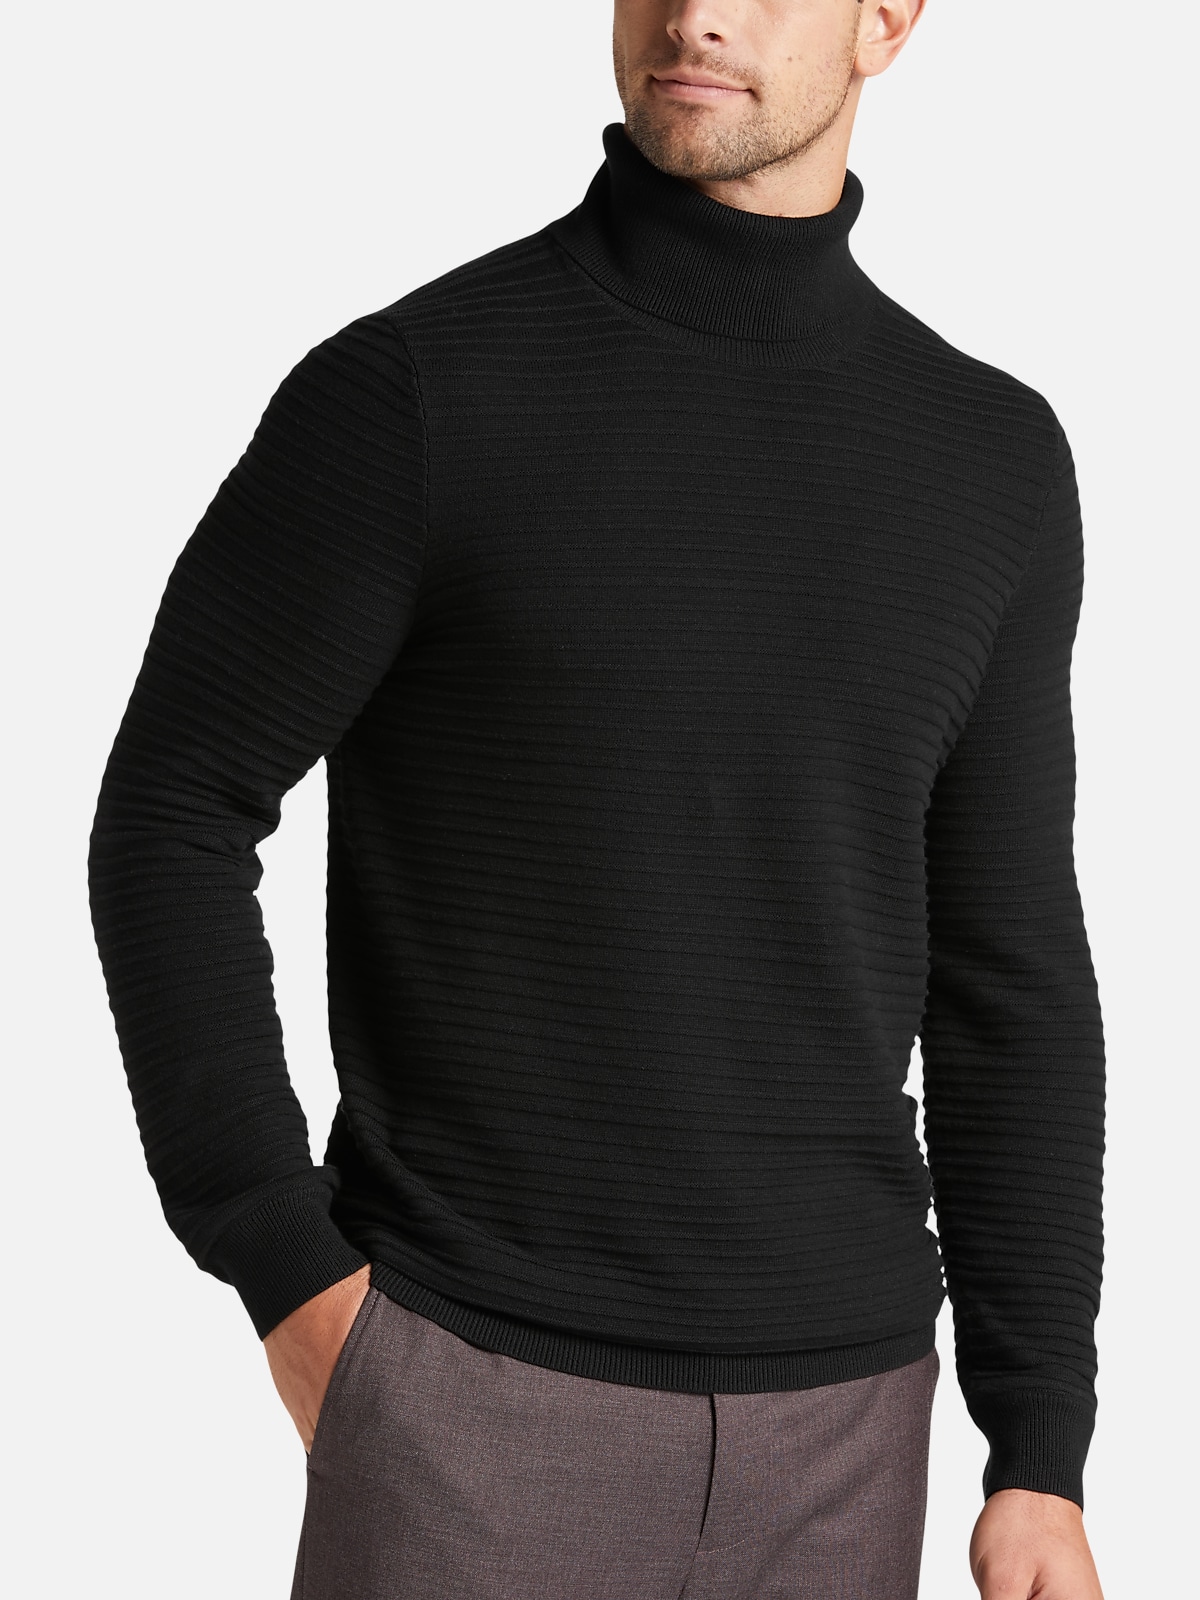 Awearness Kenneth Cole Slim Fit Turtleneck Sweater | All Sale| Men's ...